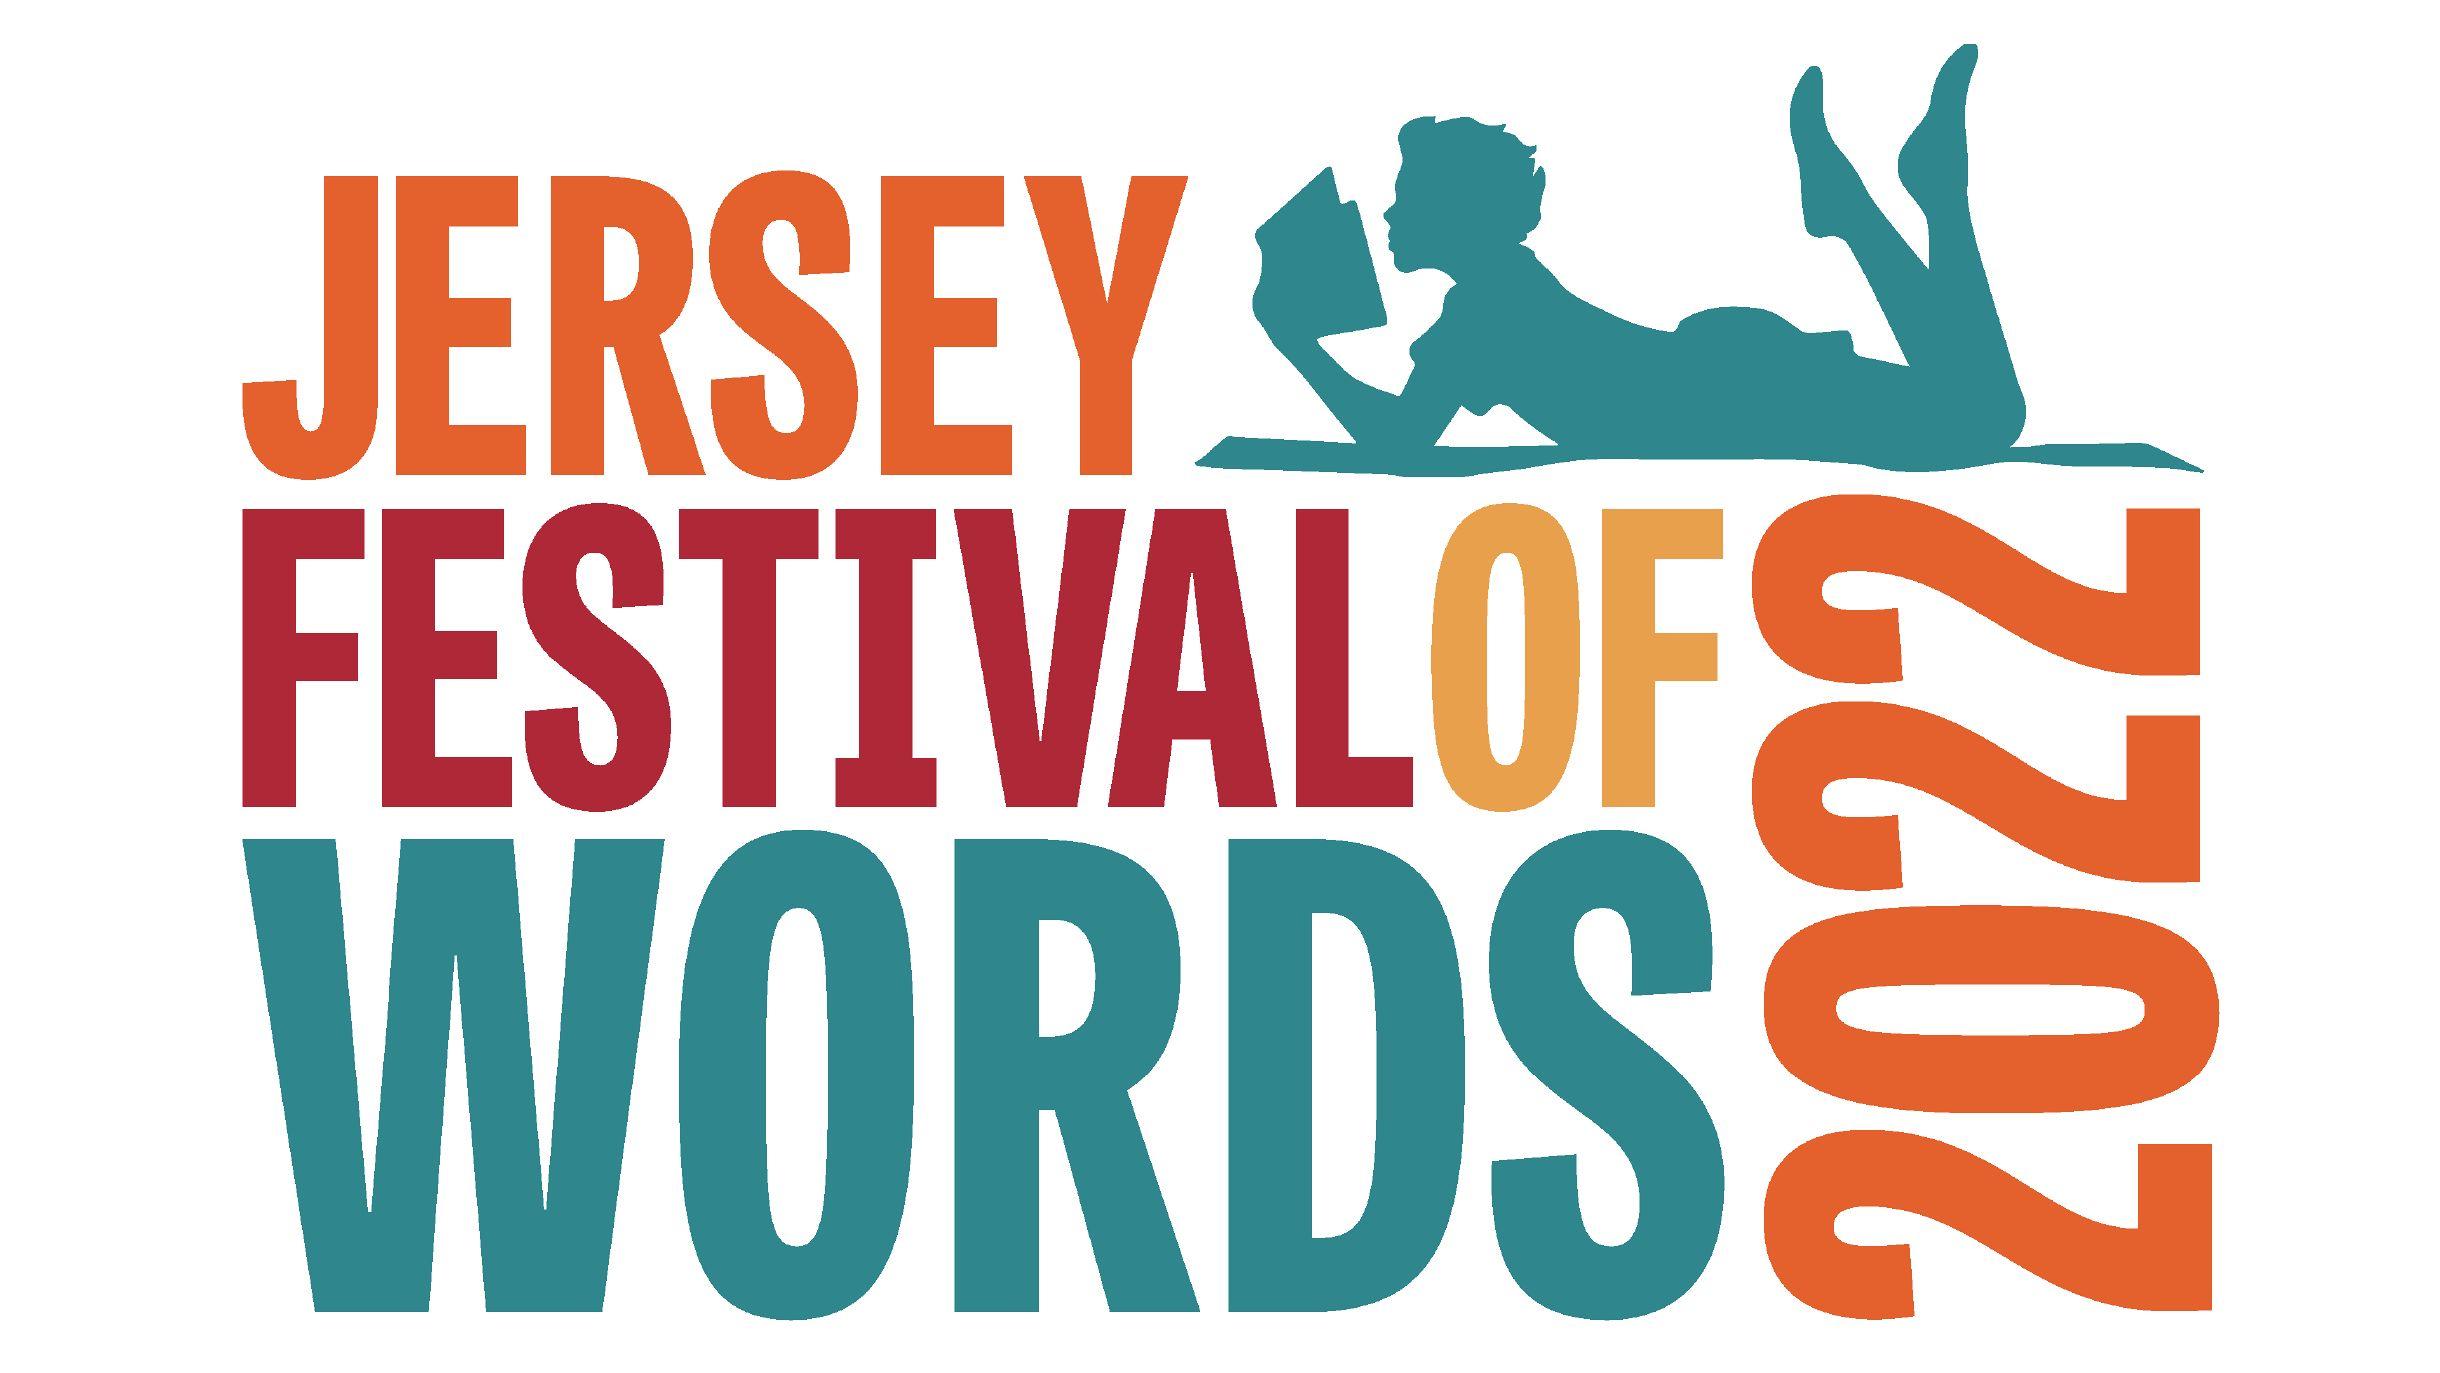 Jersey Festival of Words 2022 logo